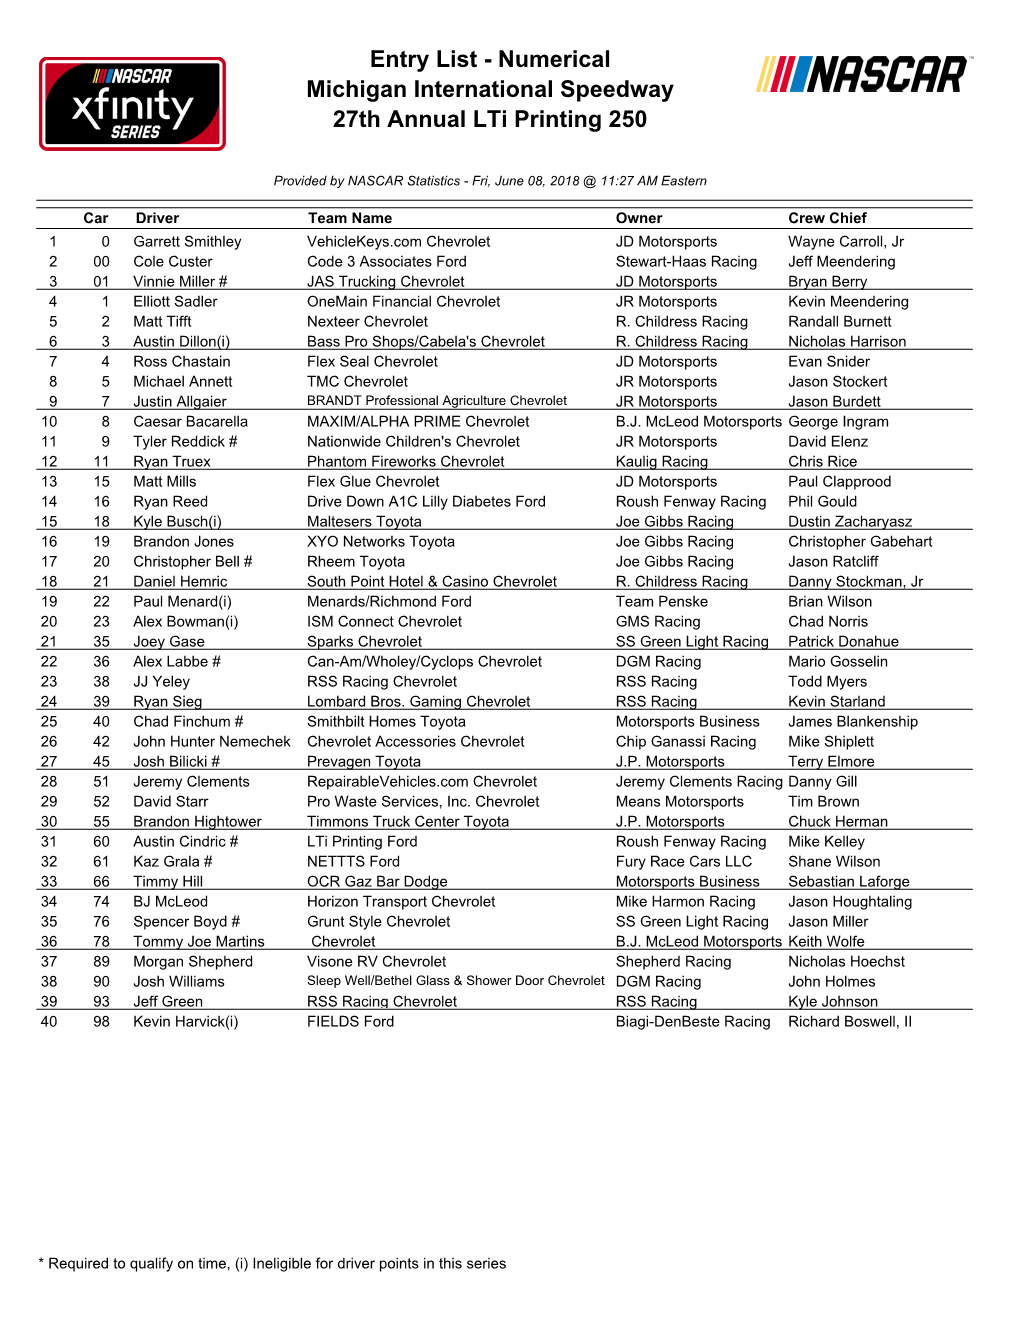 Entry List - Numerical Michigan International Speedway 27Th Annual Lti Printing 250